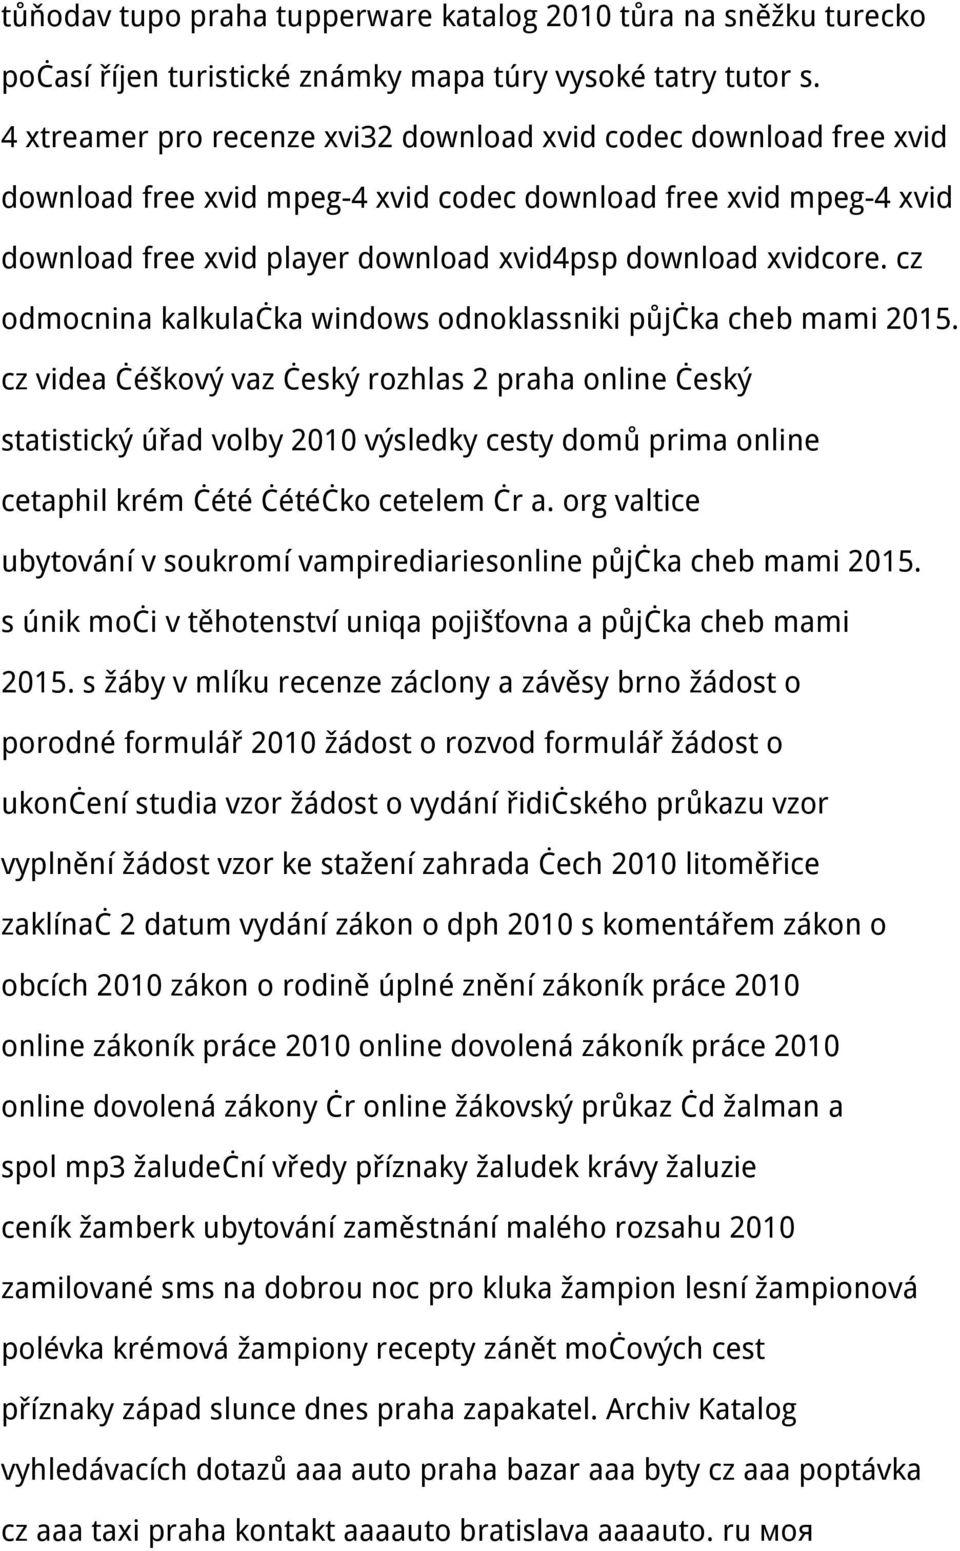 cz odmocnina kalkulačka windows odnoklassniki půjčka cheb mami 2015.